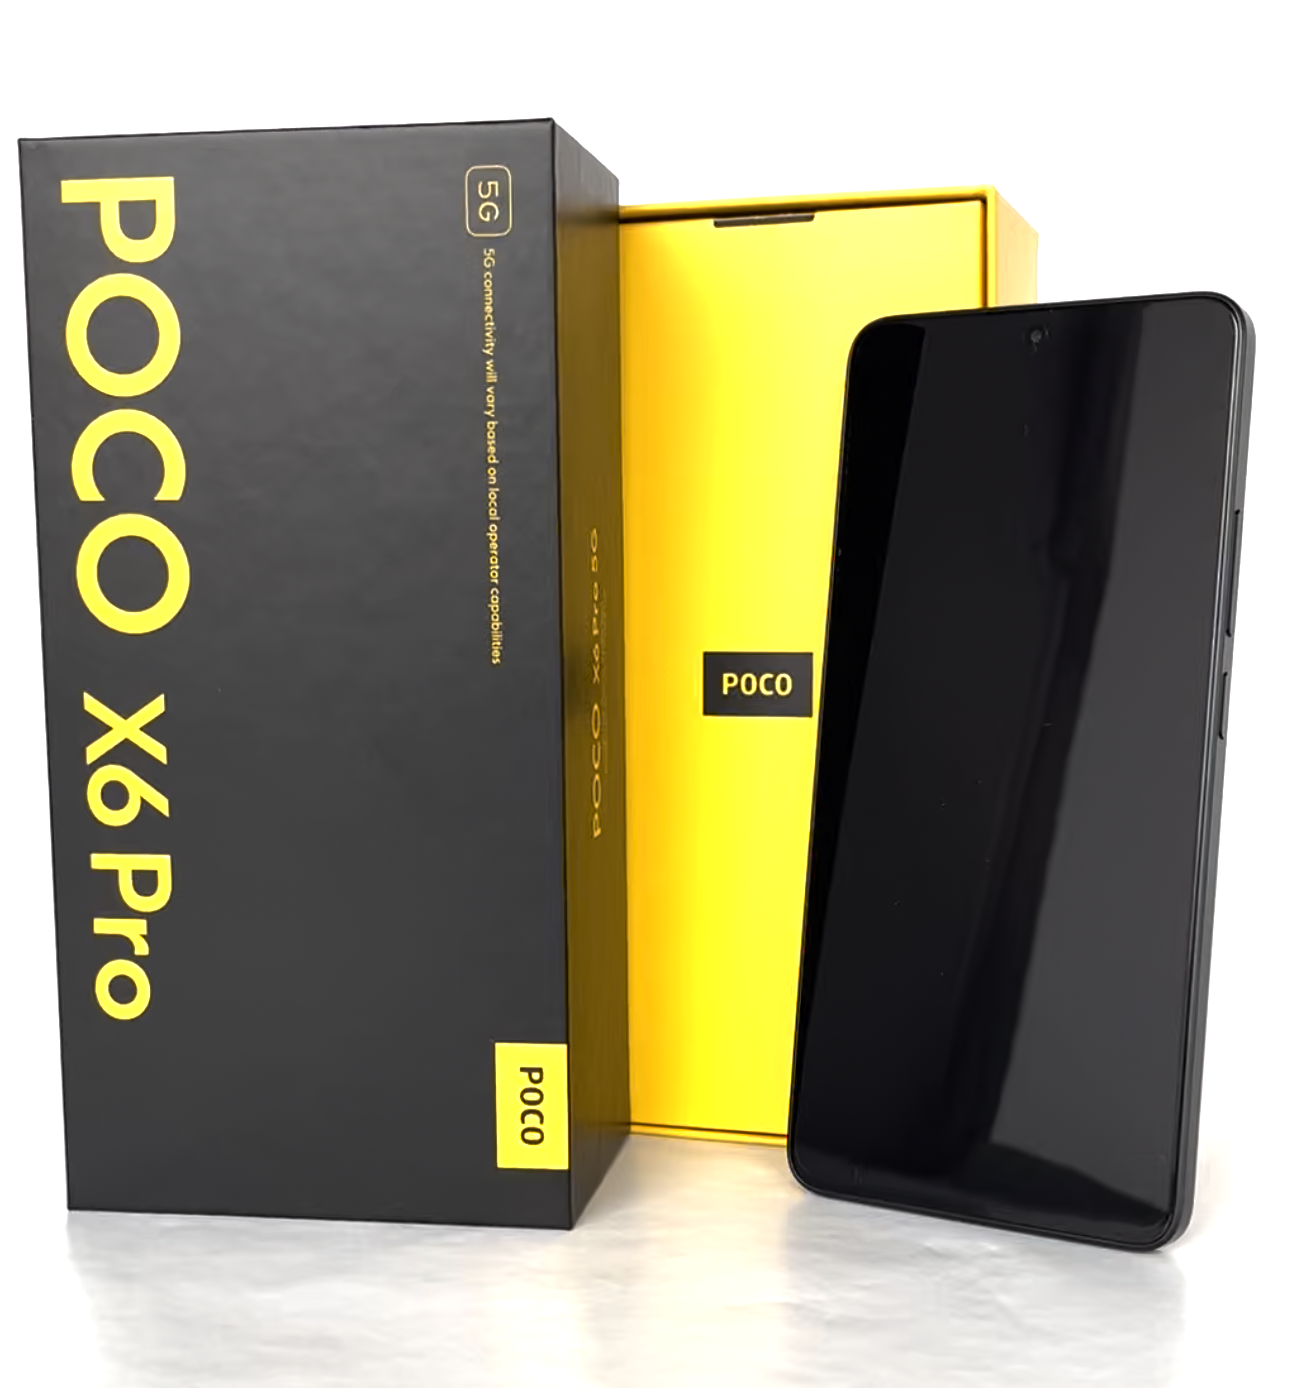 Xiaomi Poco X6 Pro 5G Dual SIM Black 256GB and 8GB RAM (6941812757796)